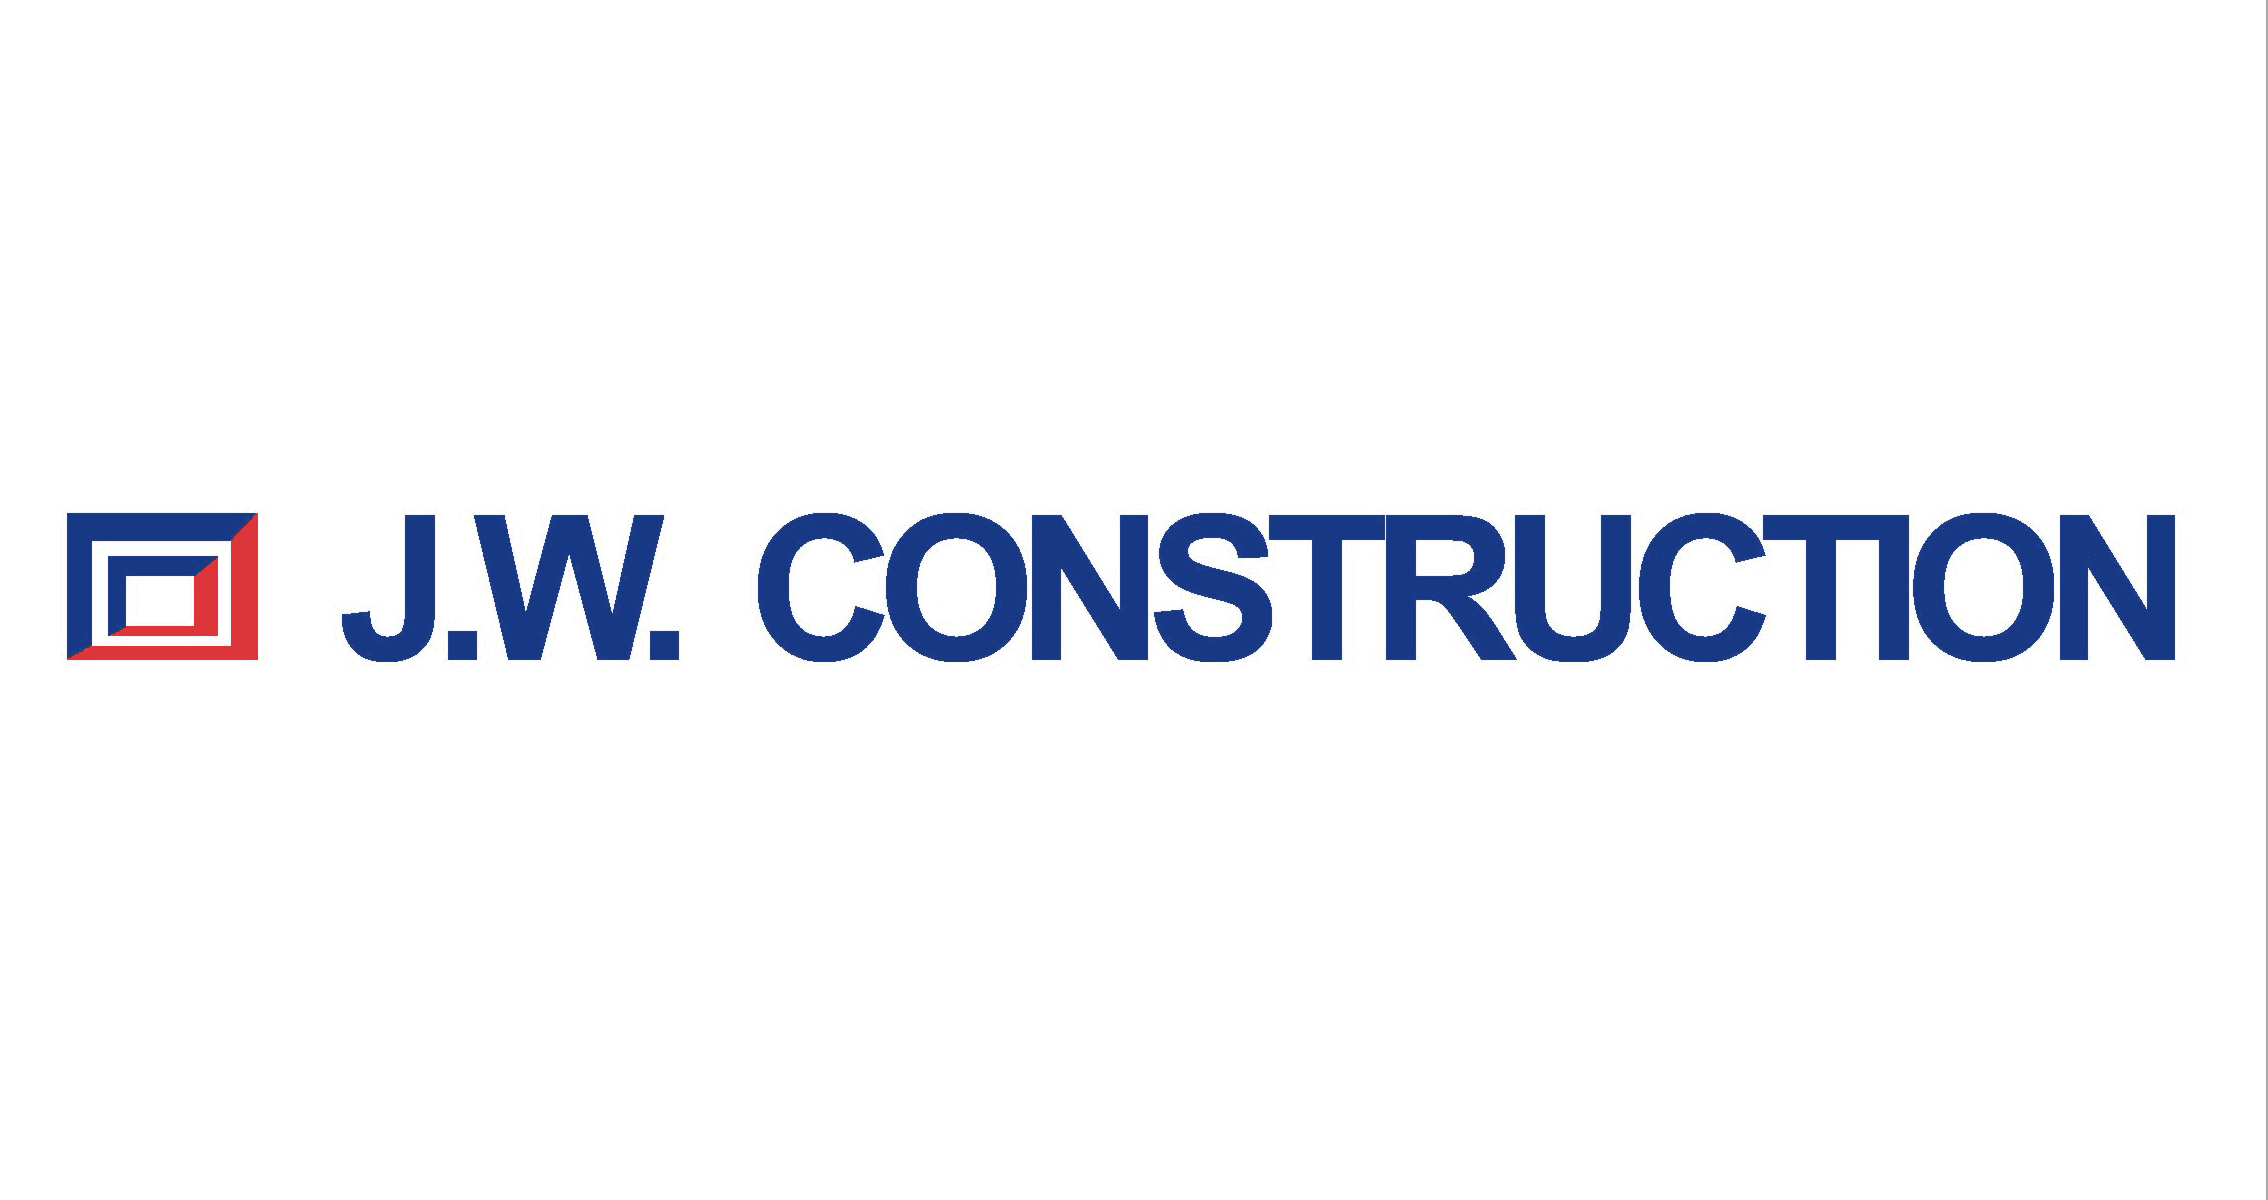 J. W. Construction